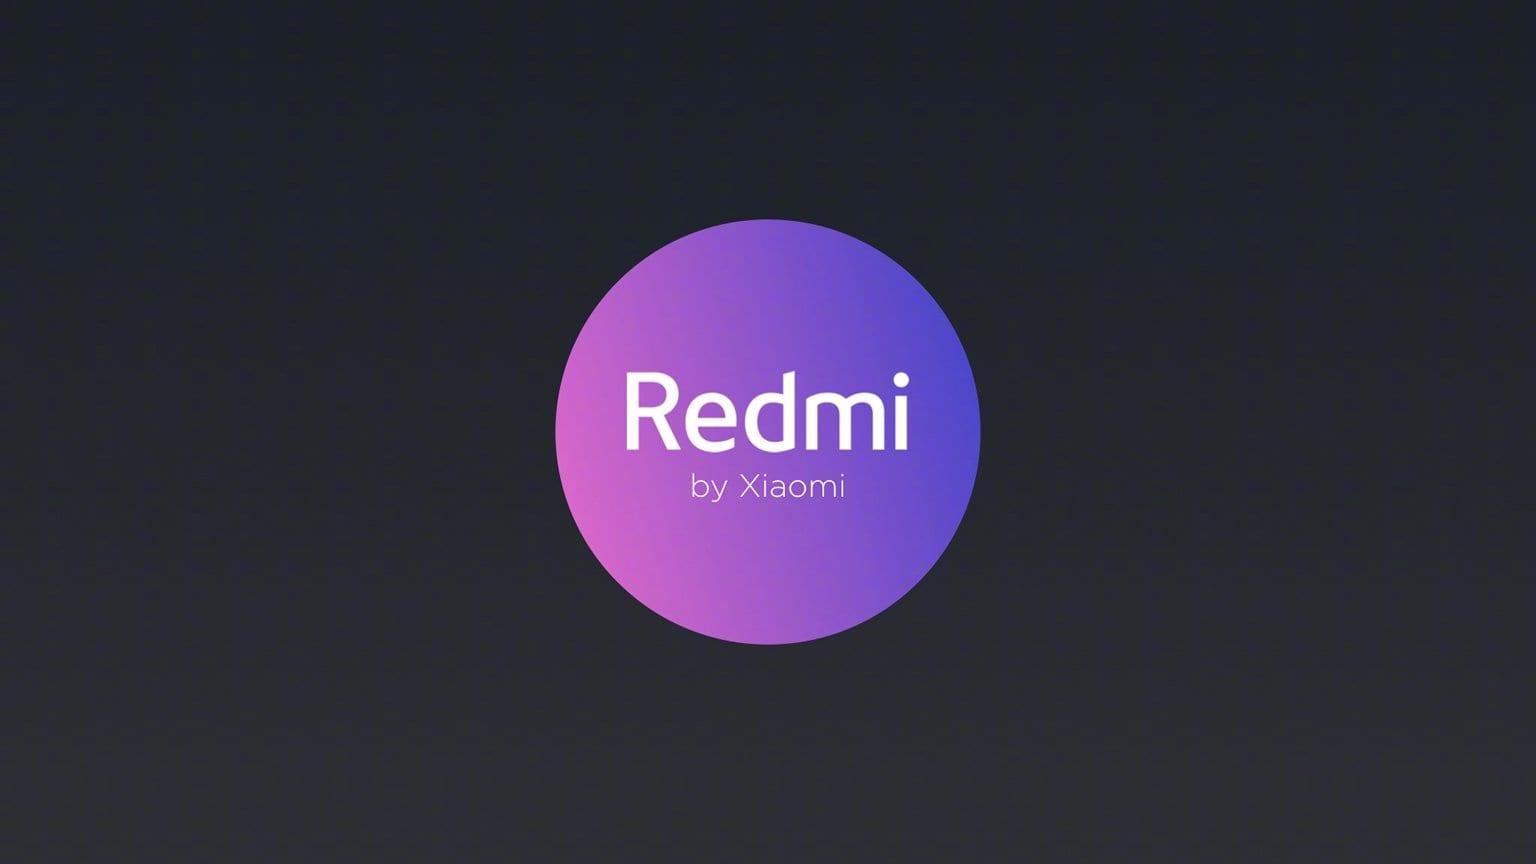 Logotipo de Redmi con fondo negro